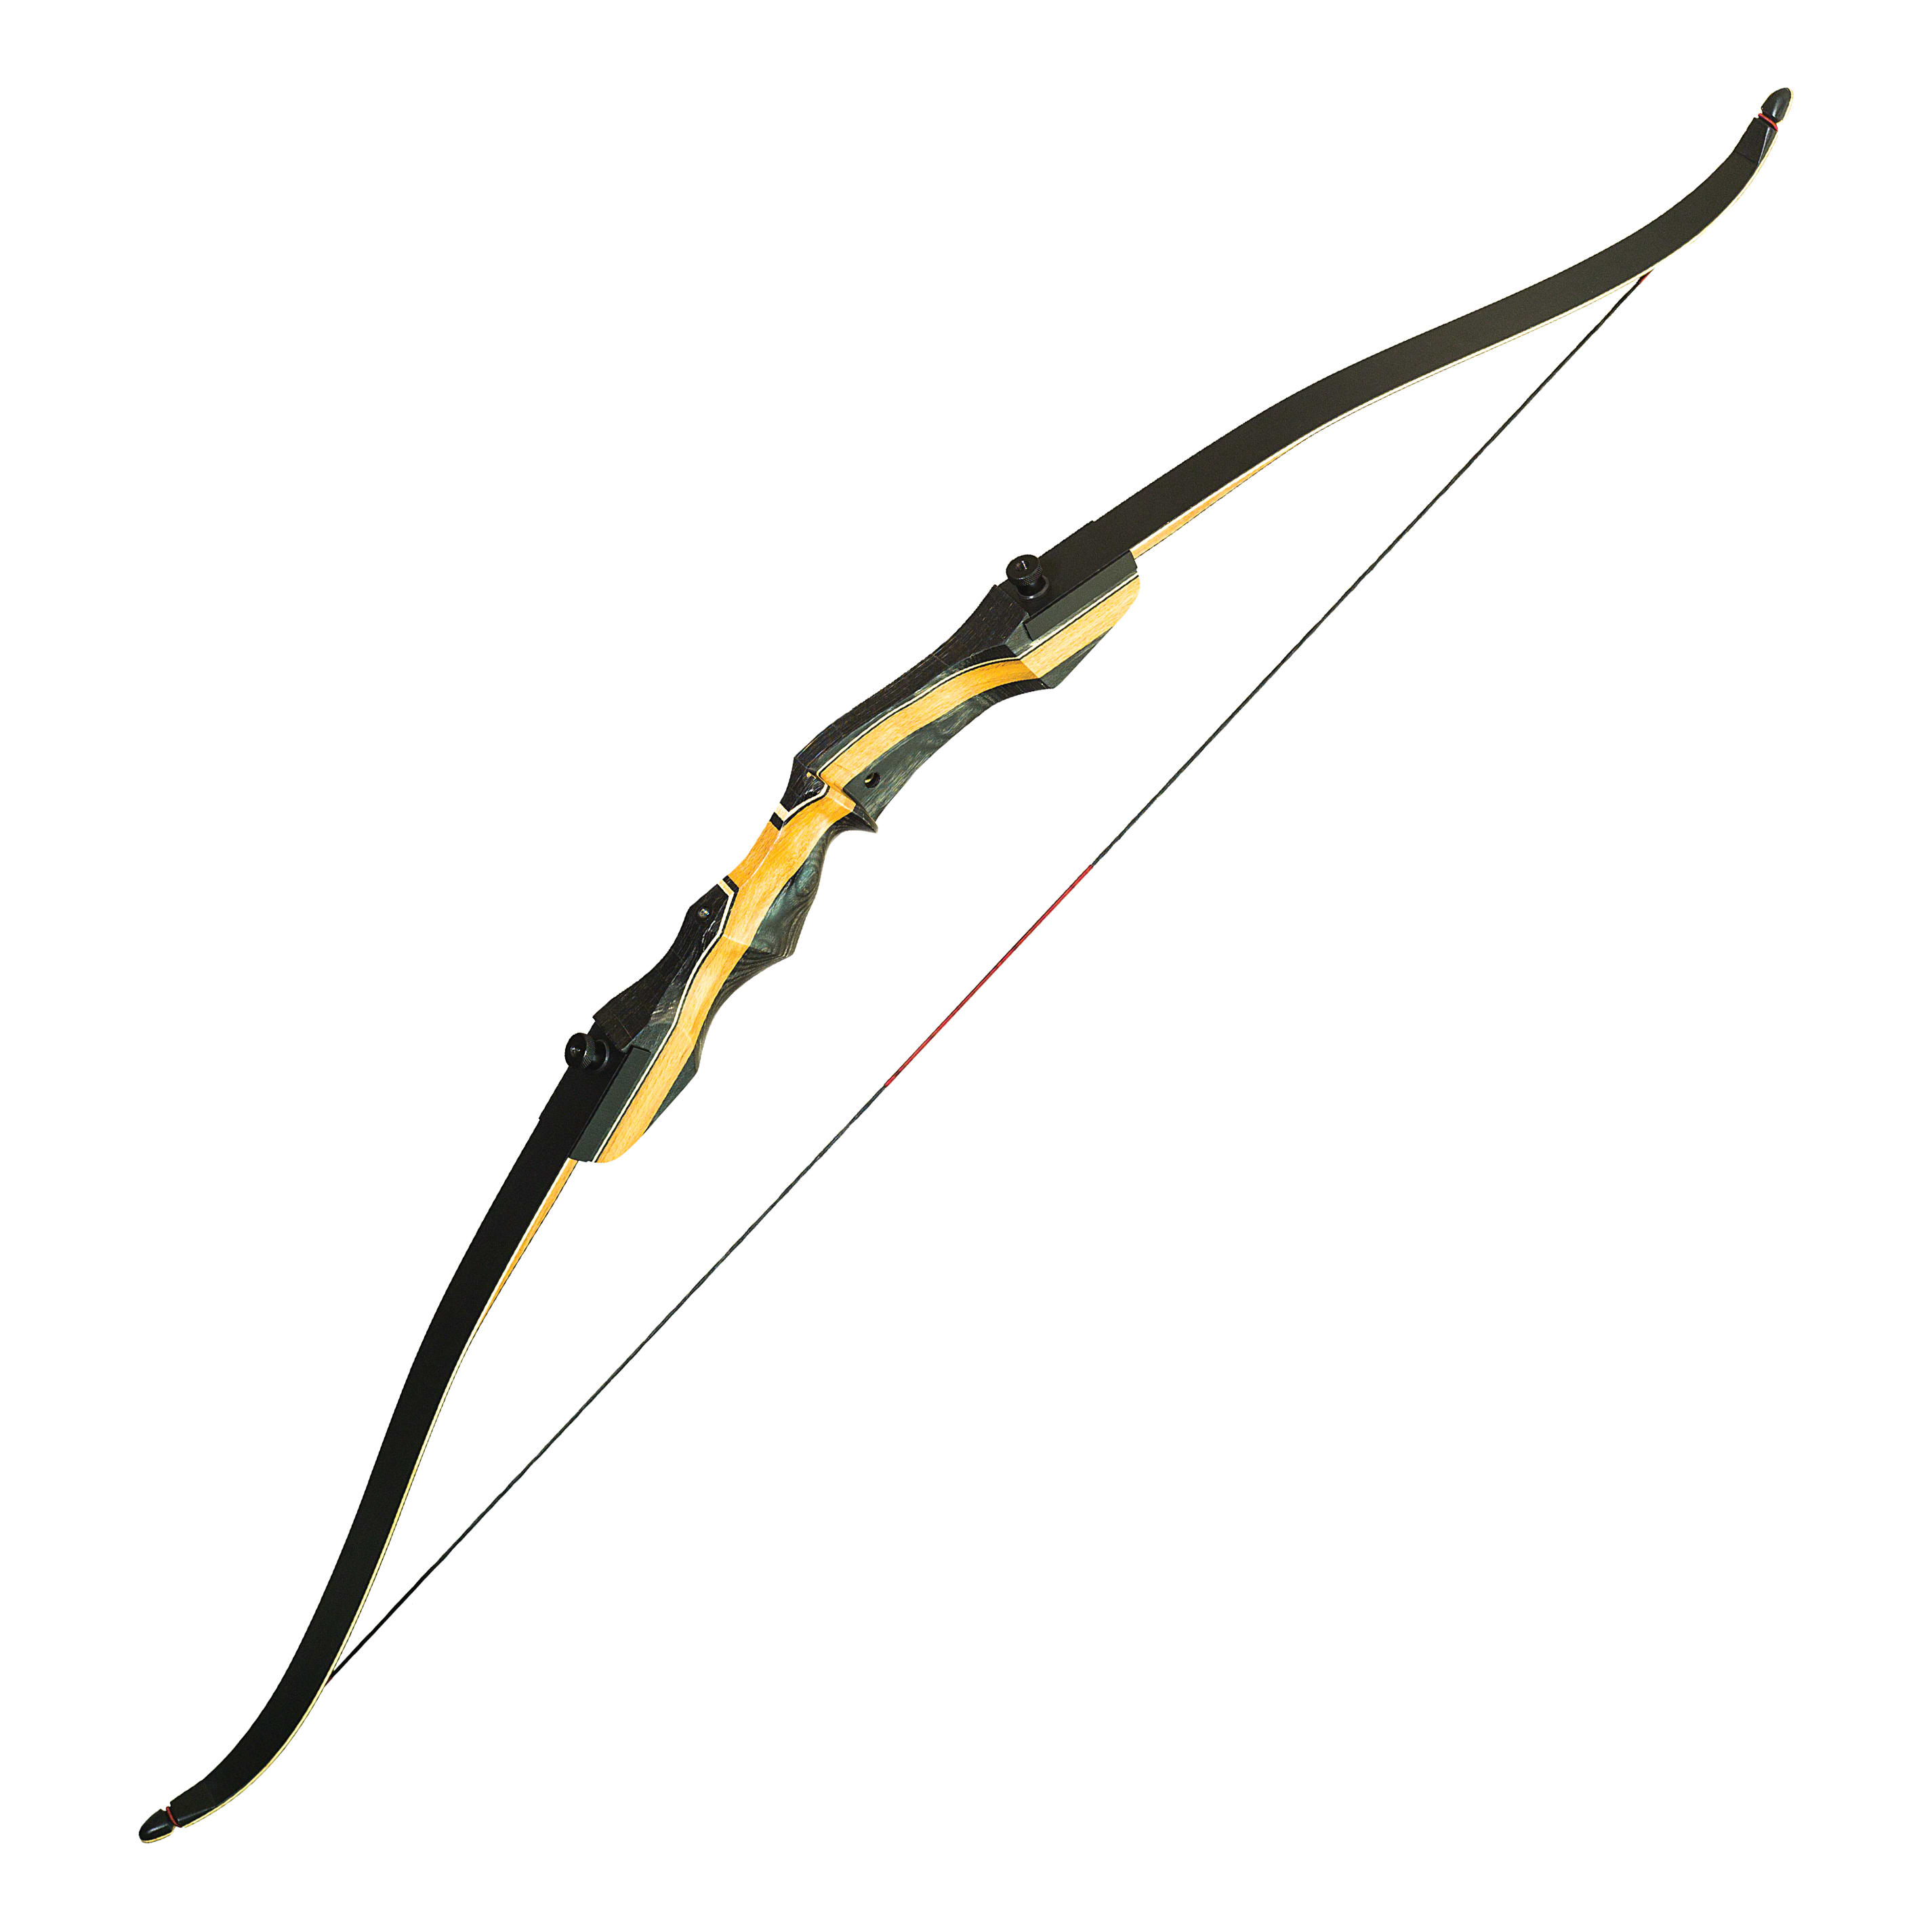 30Lb Archery Takedown Hunting Fishing Bow and Arrow Set